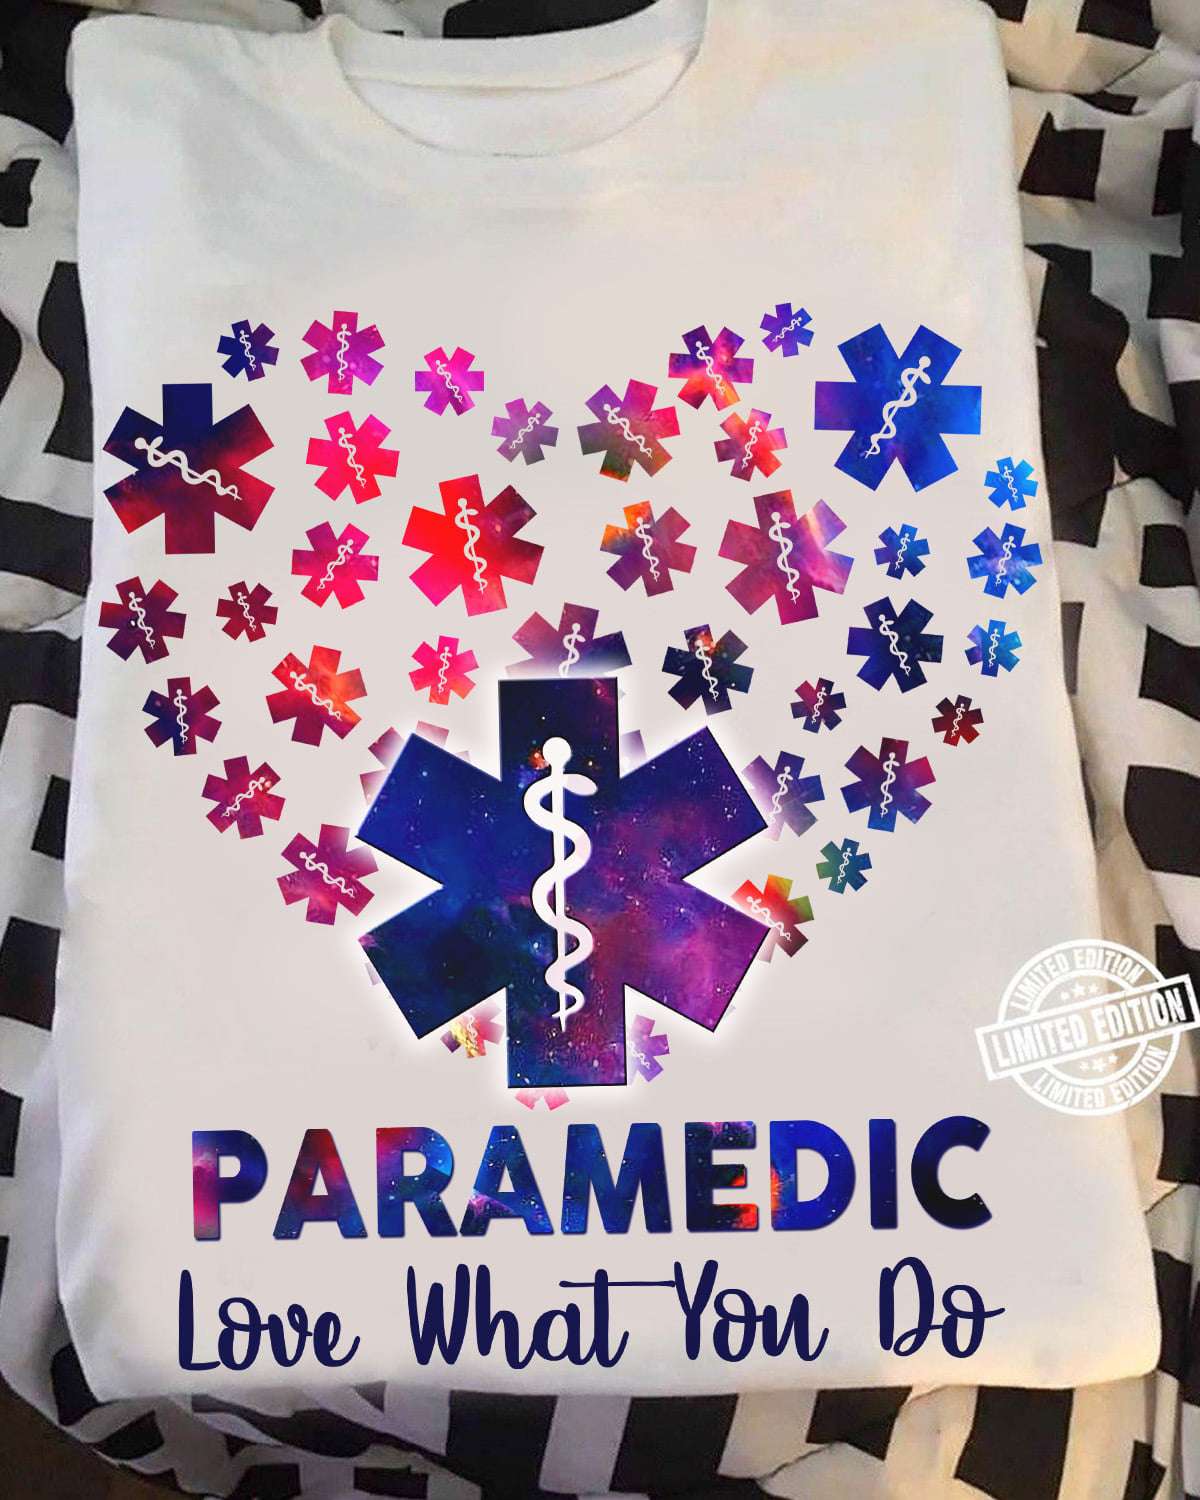 Paremedic Logo - Paramedic love what you do